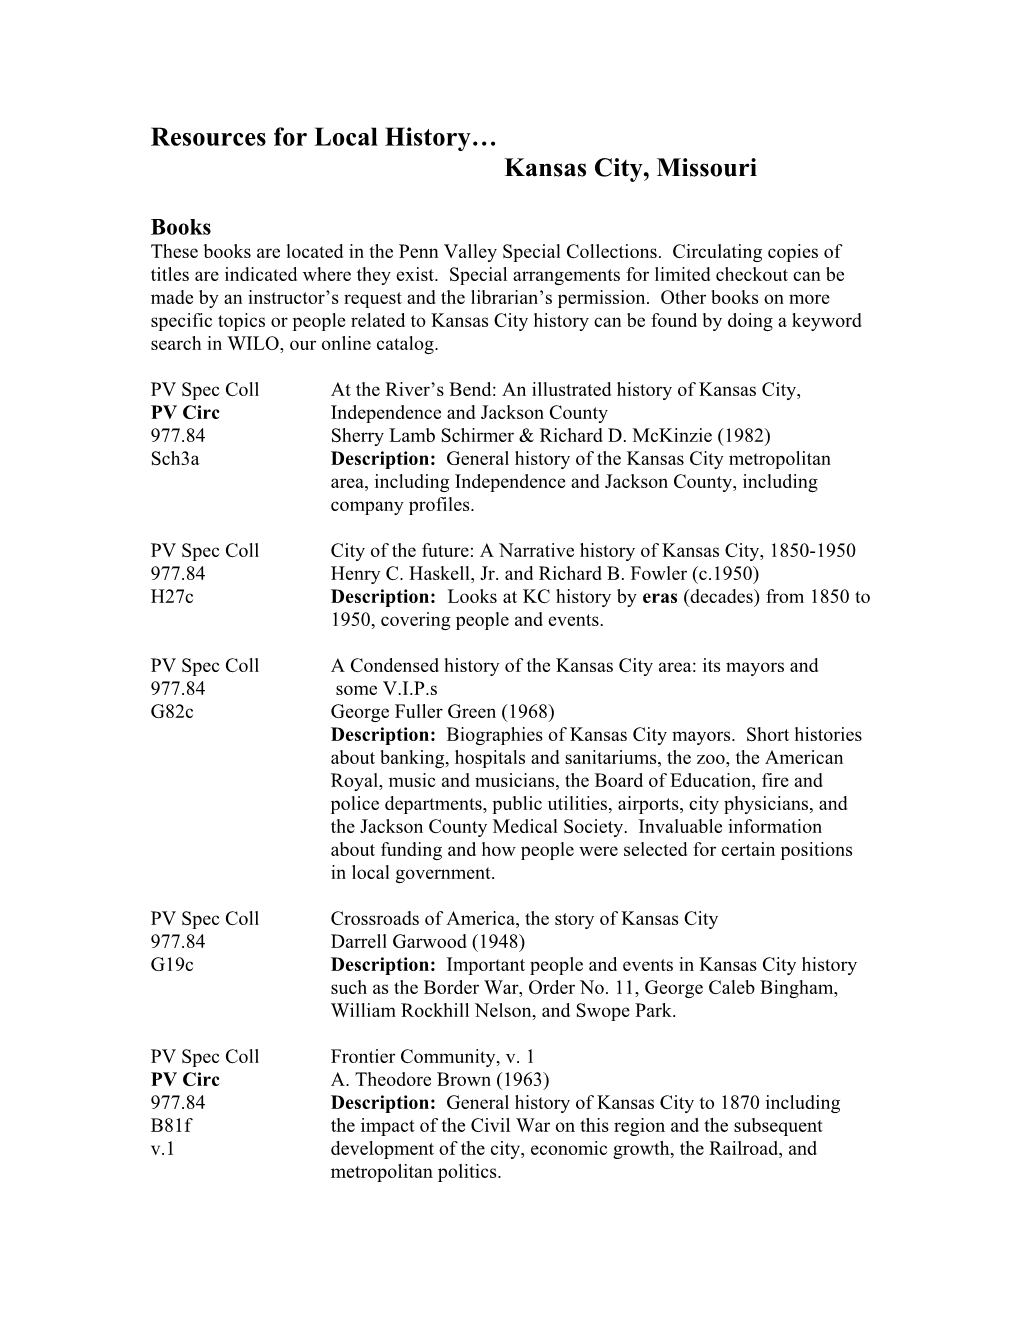 Resources for Local History… Kansas City, Missouri